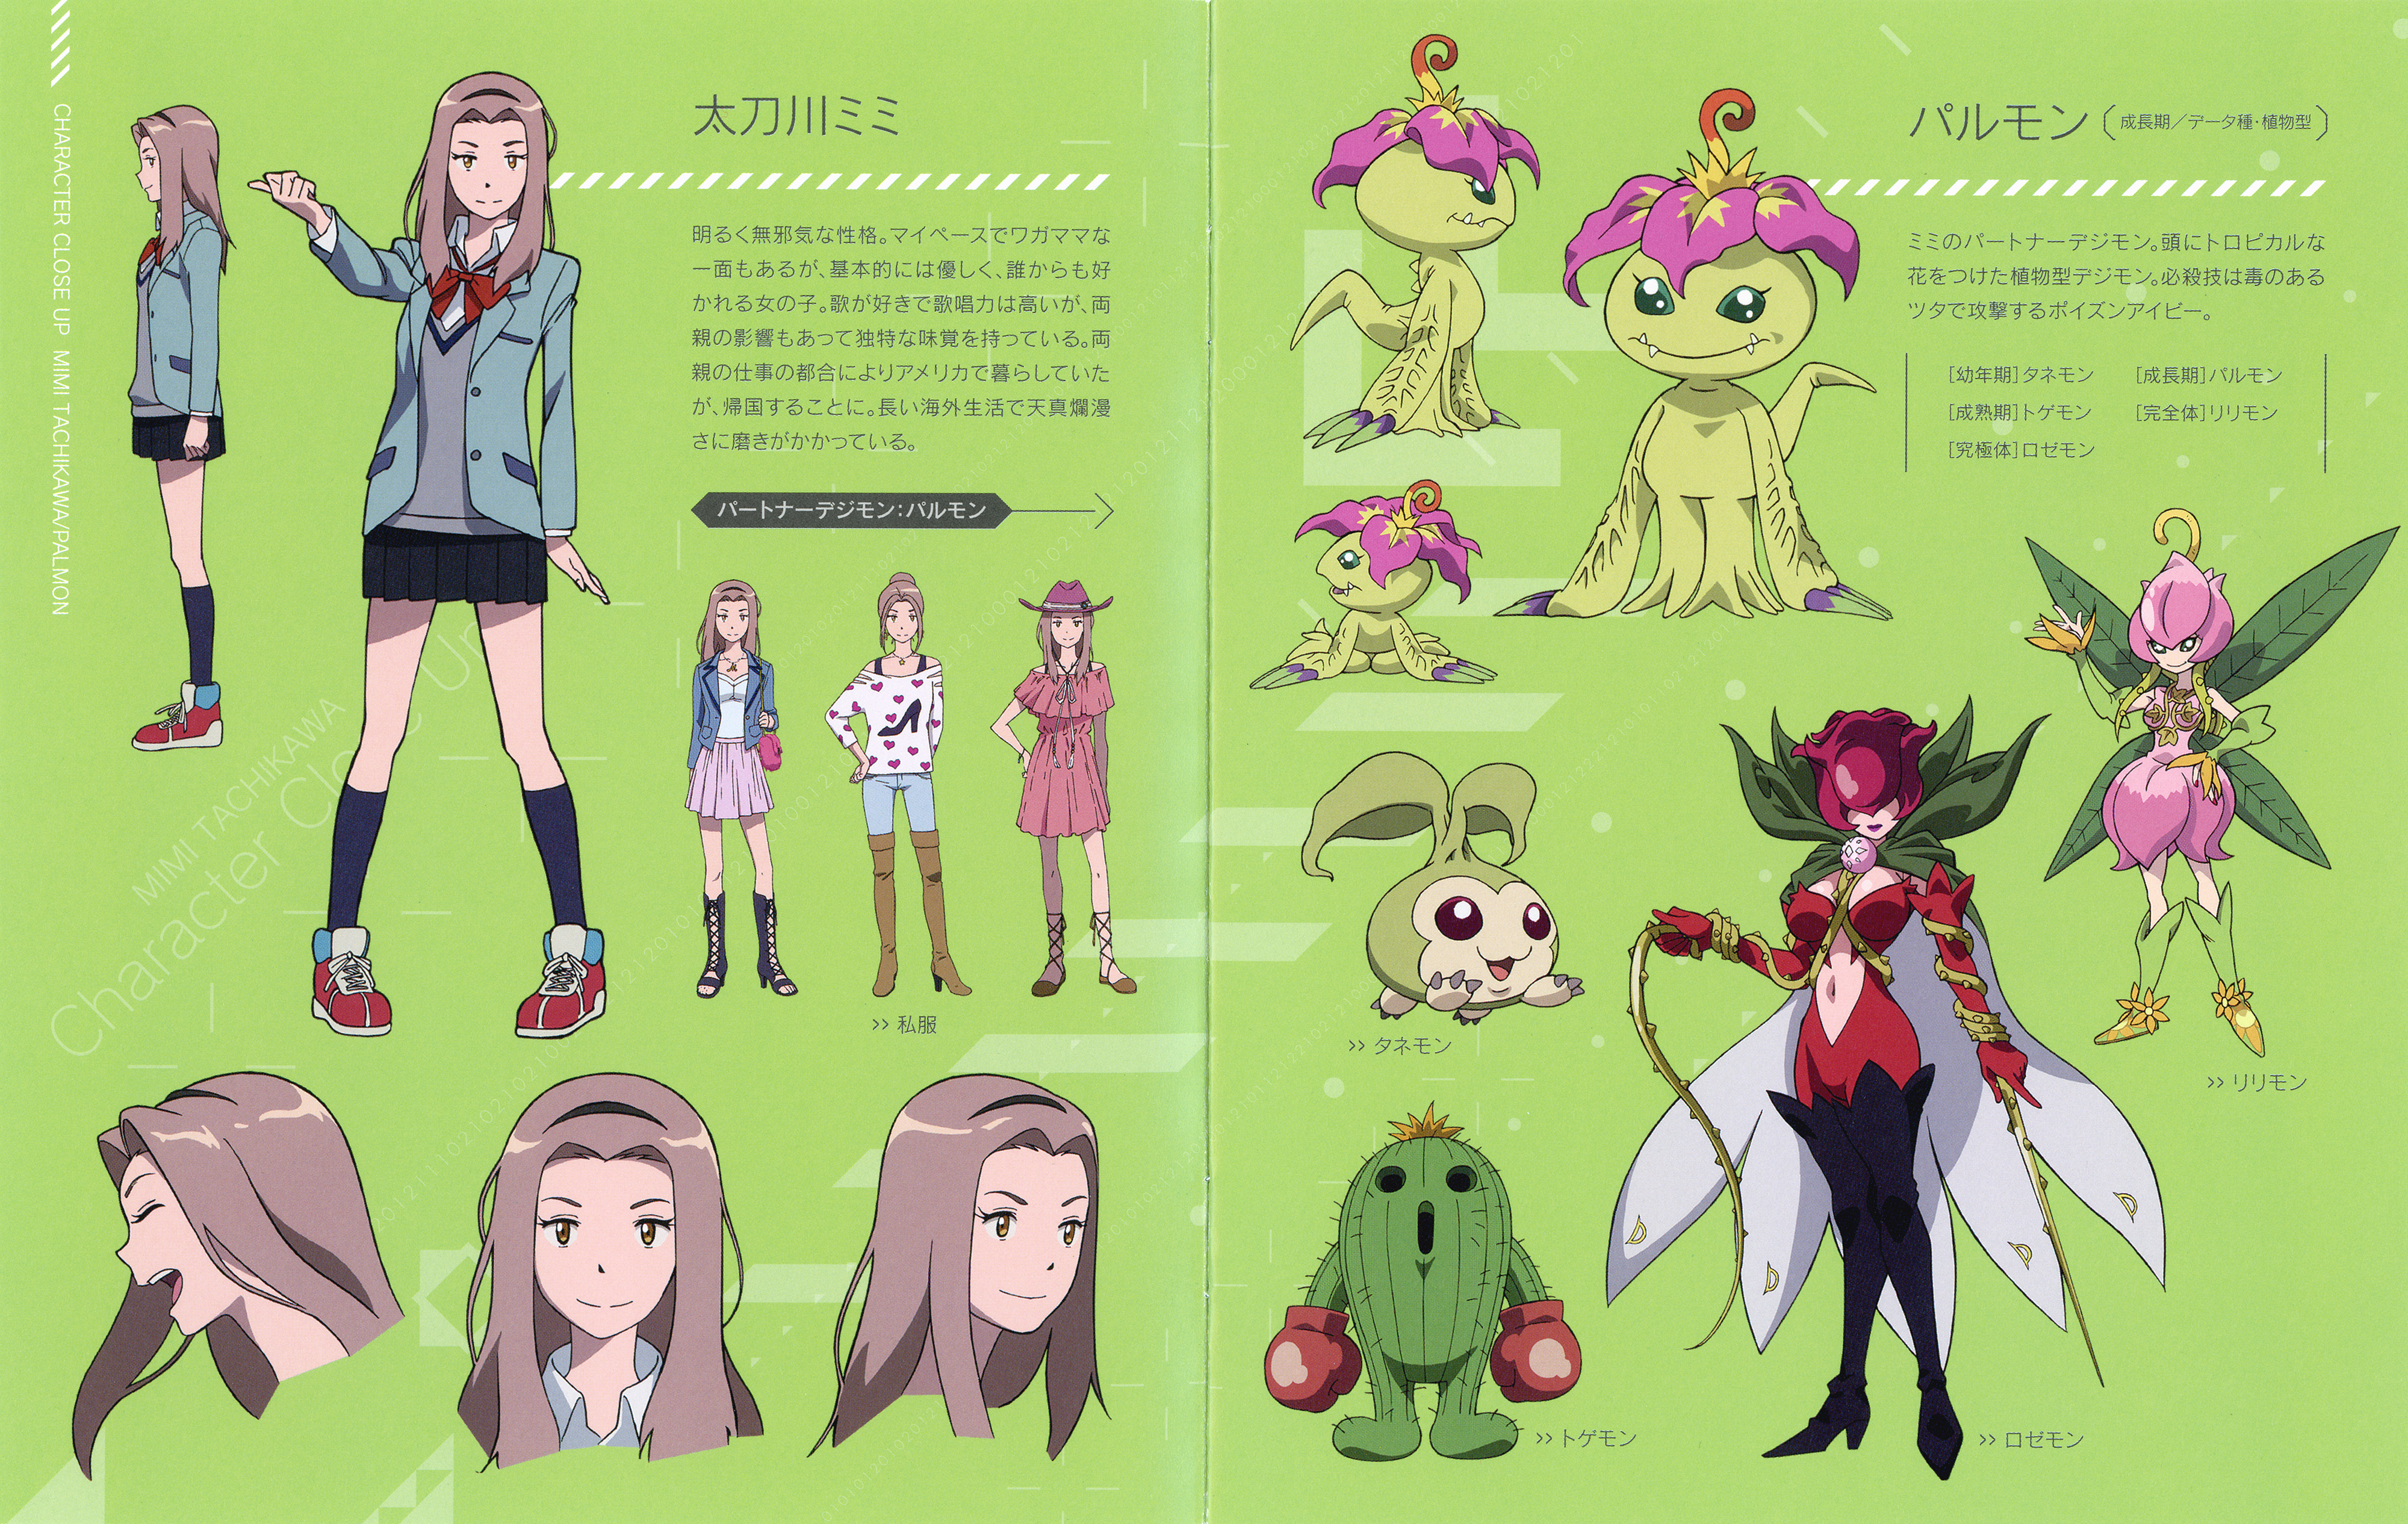 Rosemon Digimon Adventure Zerochan Anime Image Board